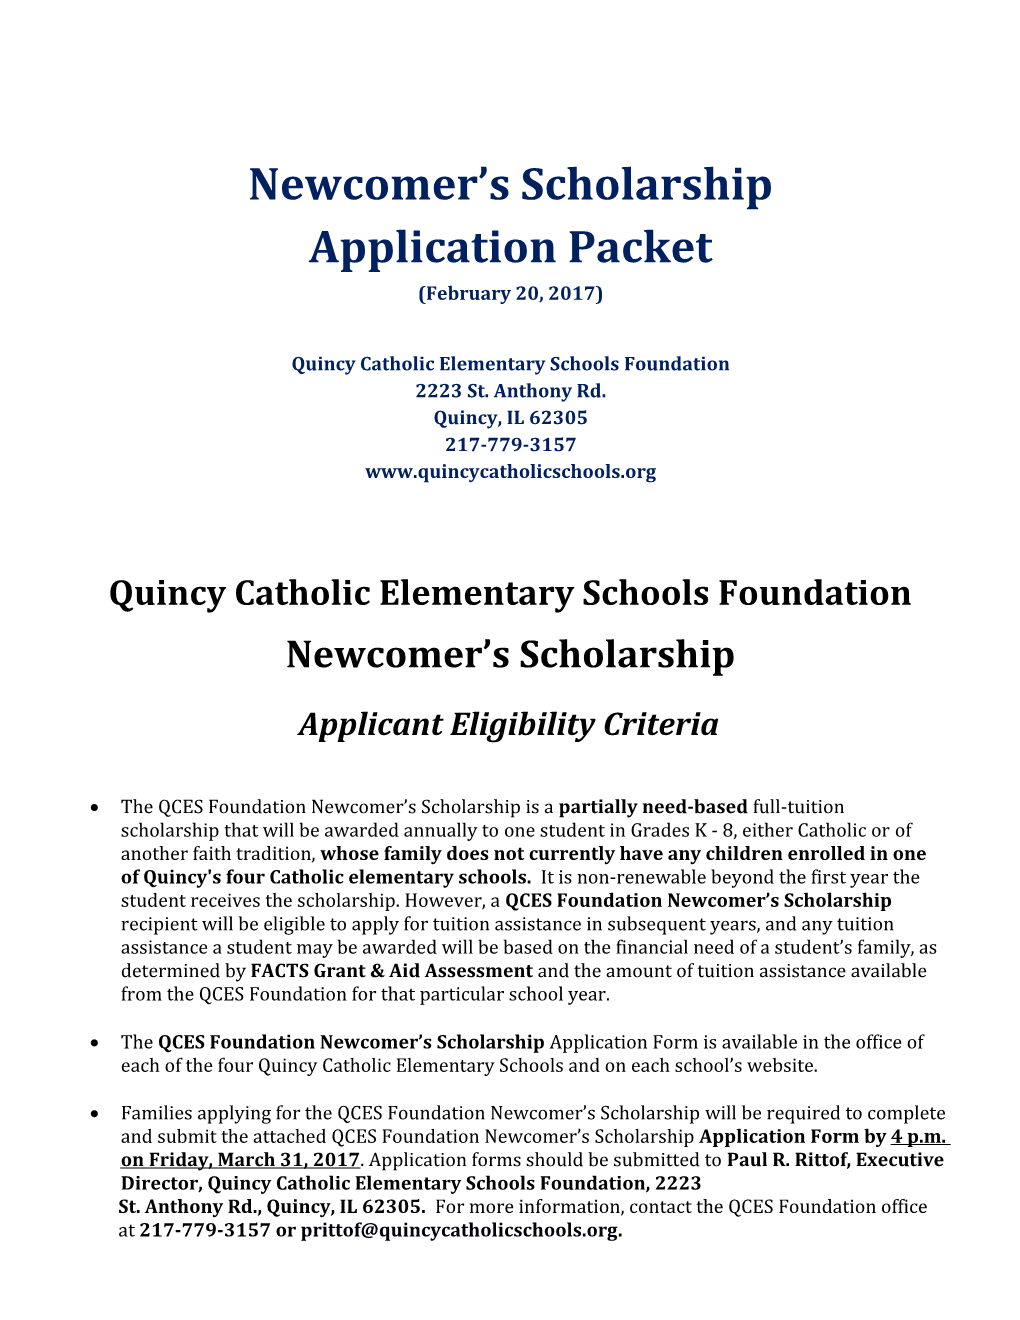 Quincy Catholic Elementary Schools Foundation